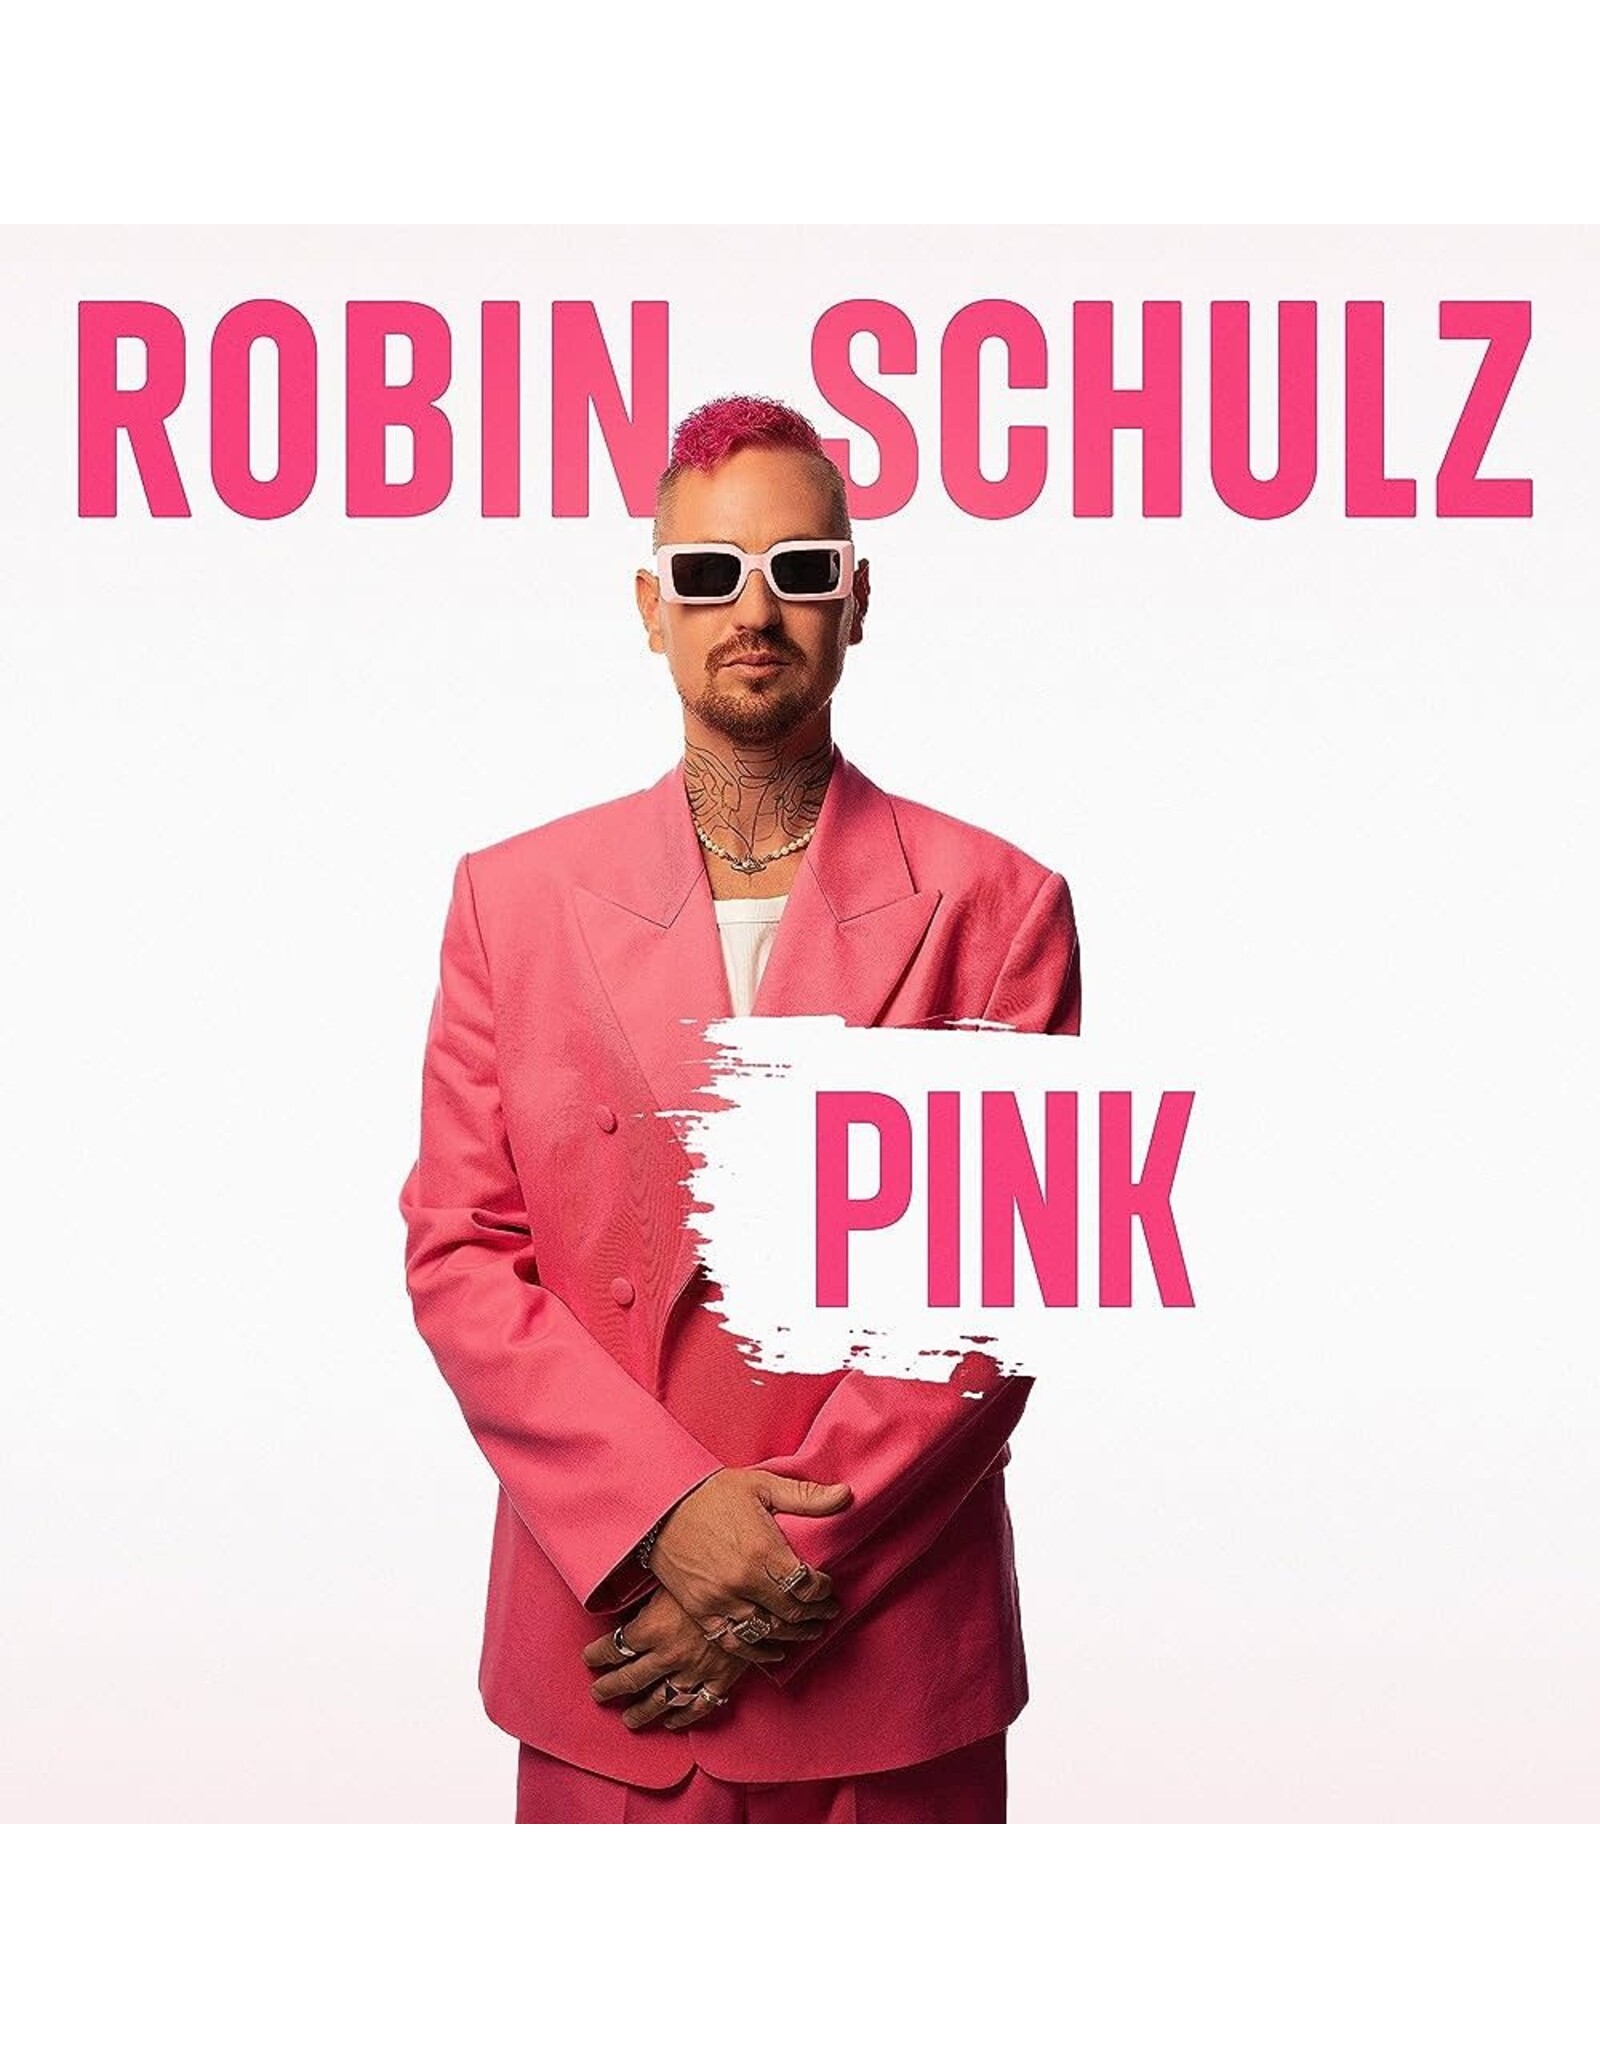 Robin Schulz - PINK (Clear Vinyl)